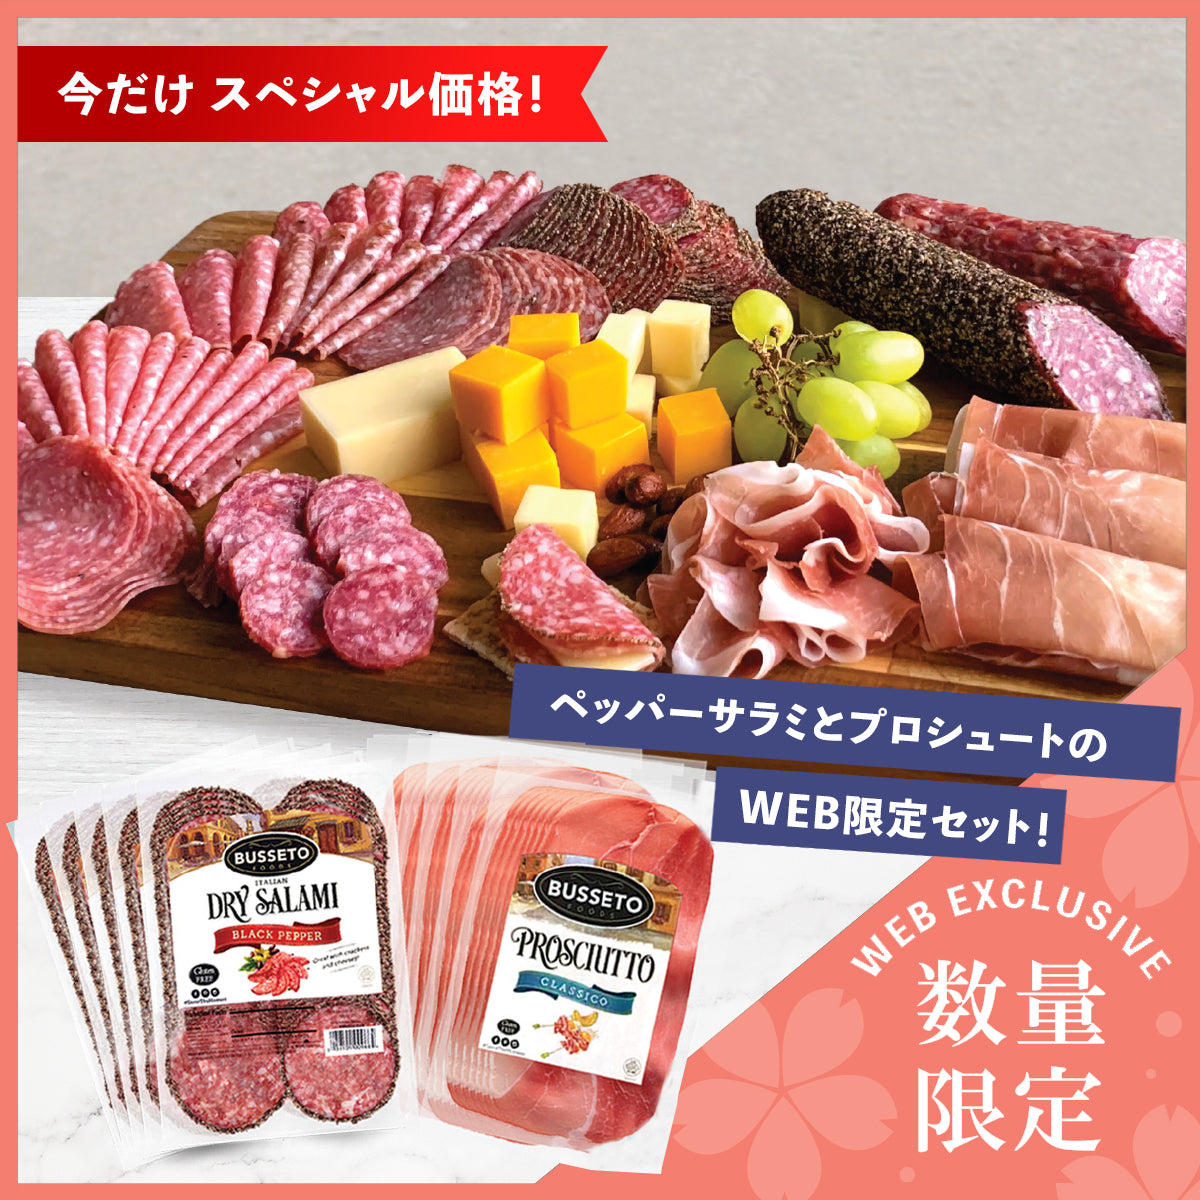 【Limited Quantity】Pepper Salami Sliced & Prosciutto Collection